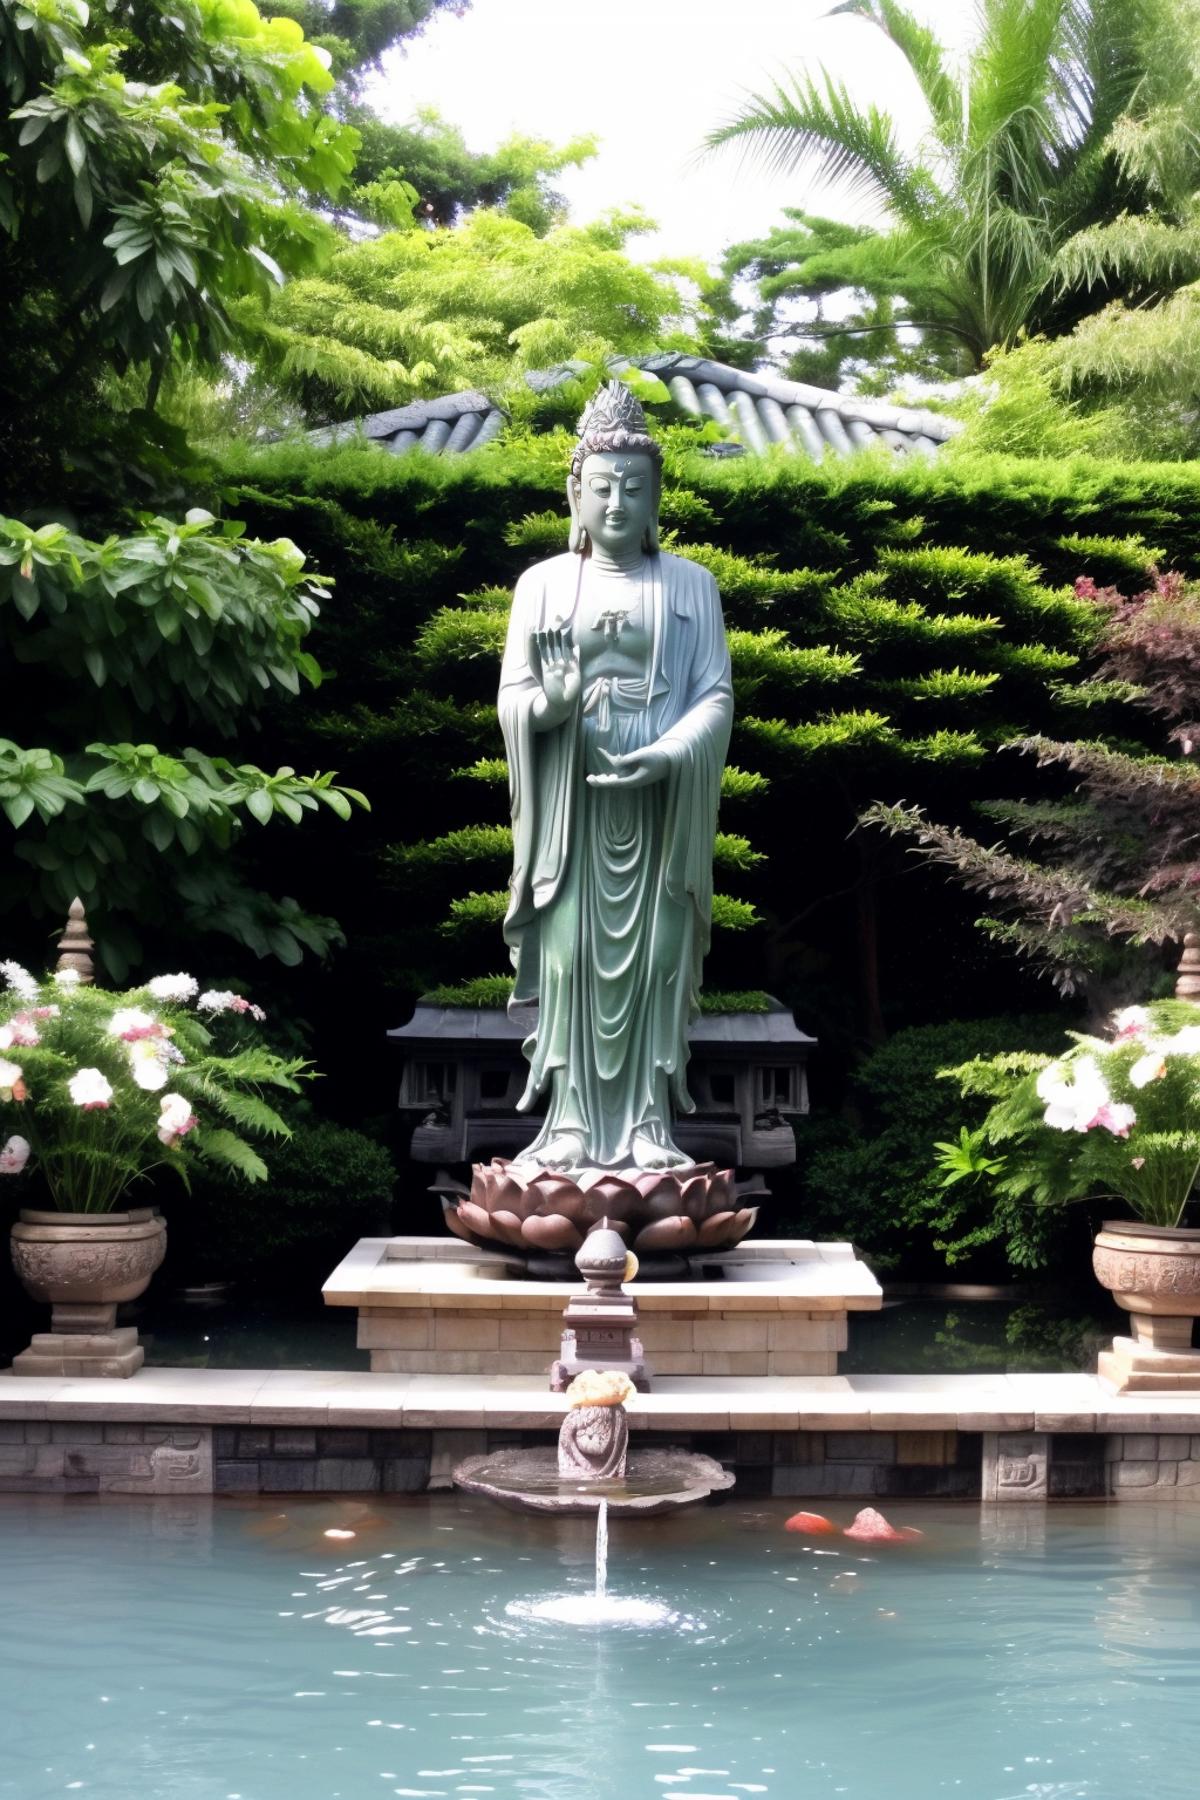 JJs Budha Statue image by jjhuang